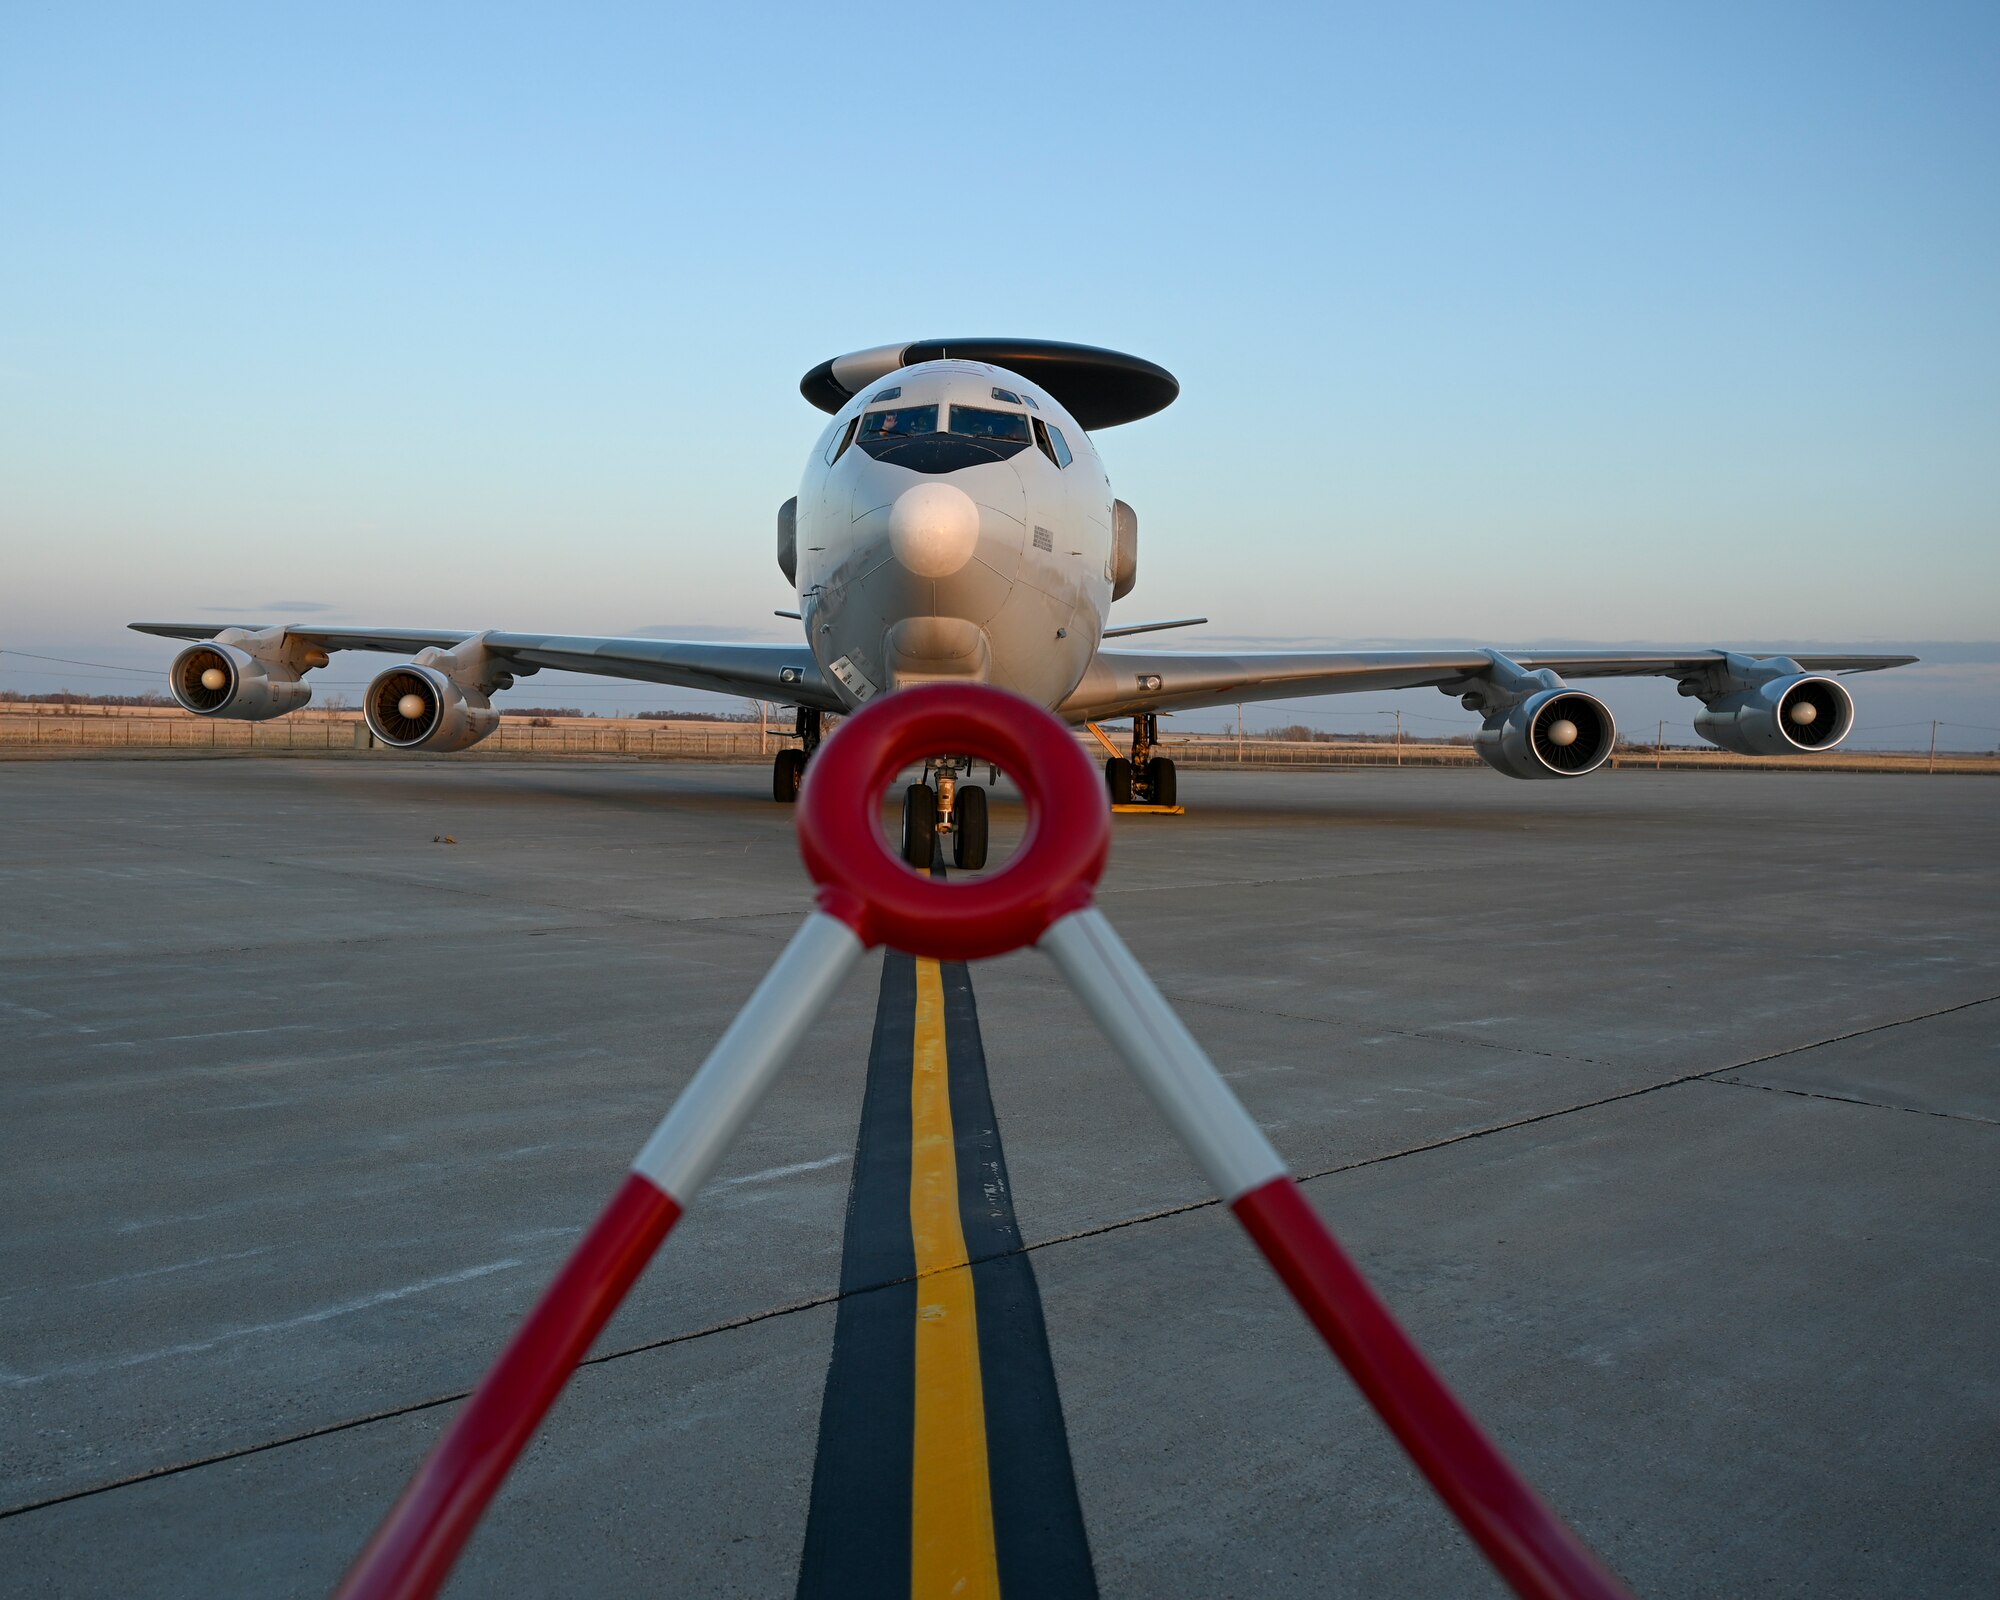 An E-3 Sentry aircraft sits parked